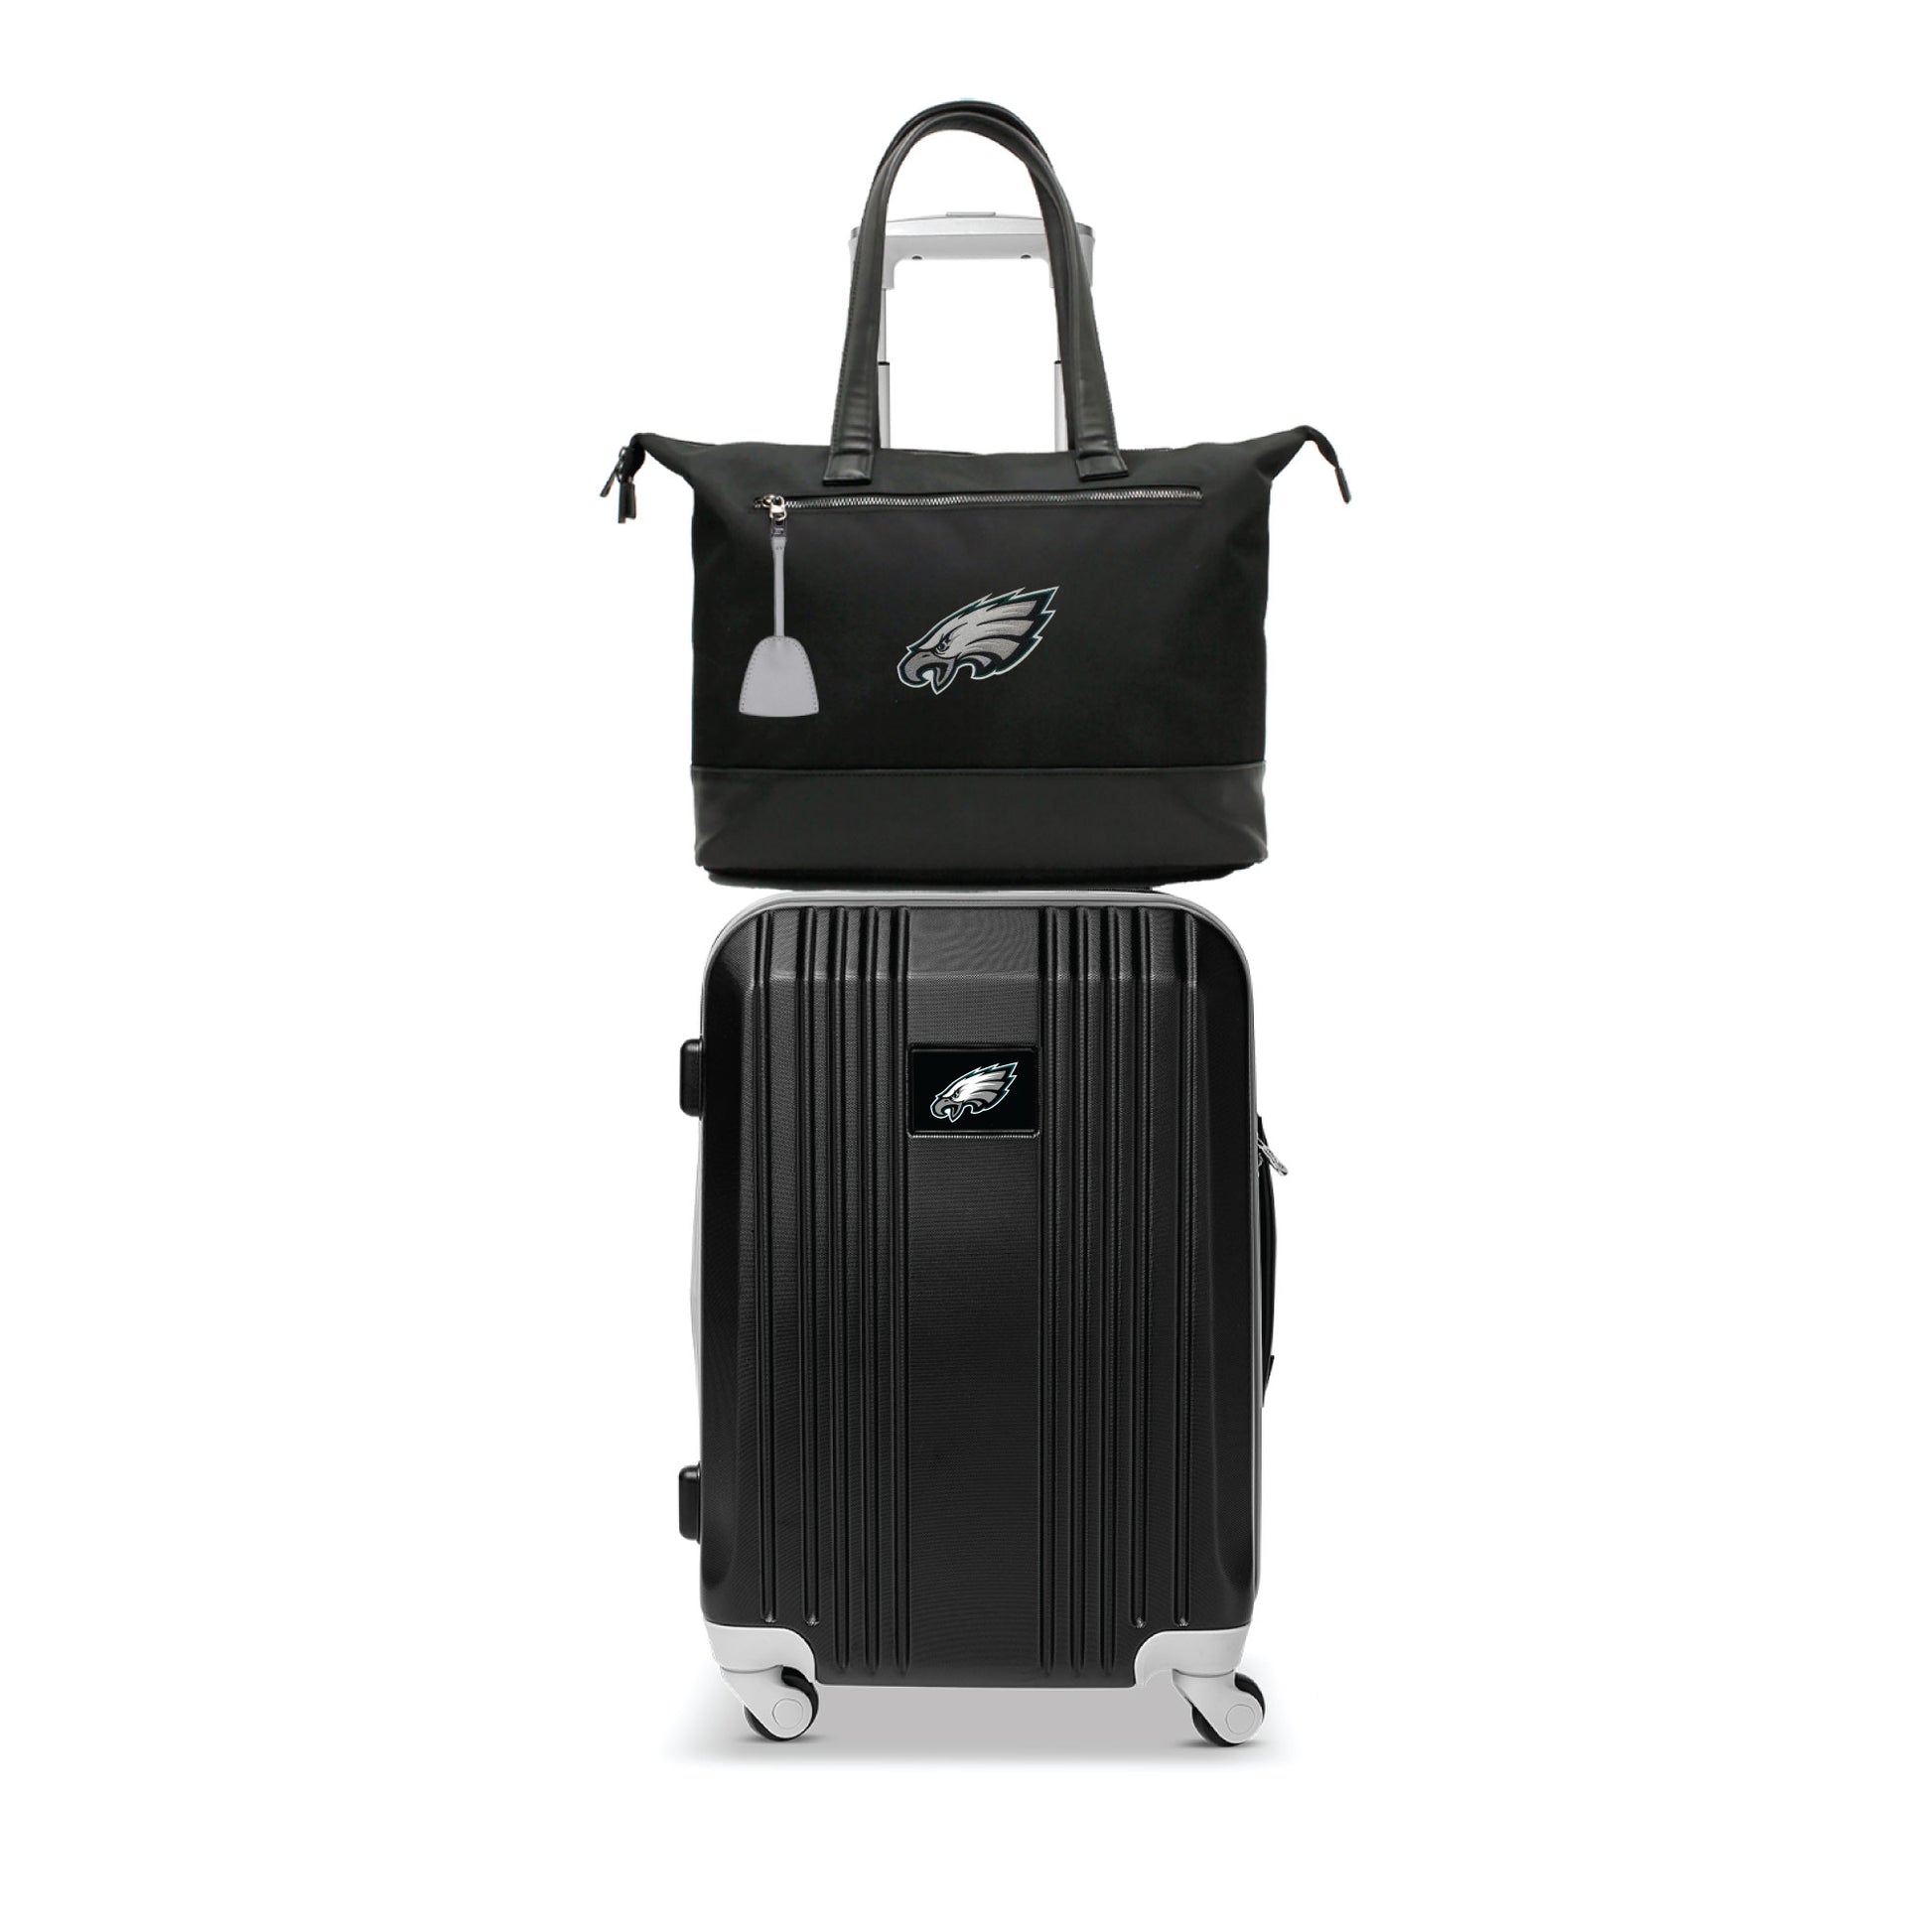 Philadelphia Eagles Premium Laptop Tote Bag and Luggage Set